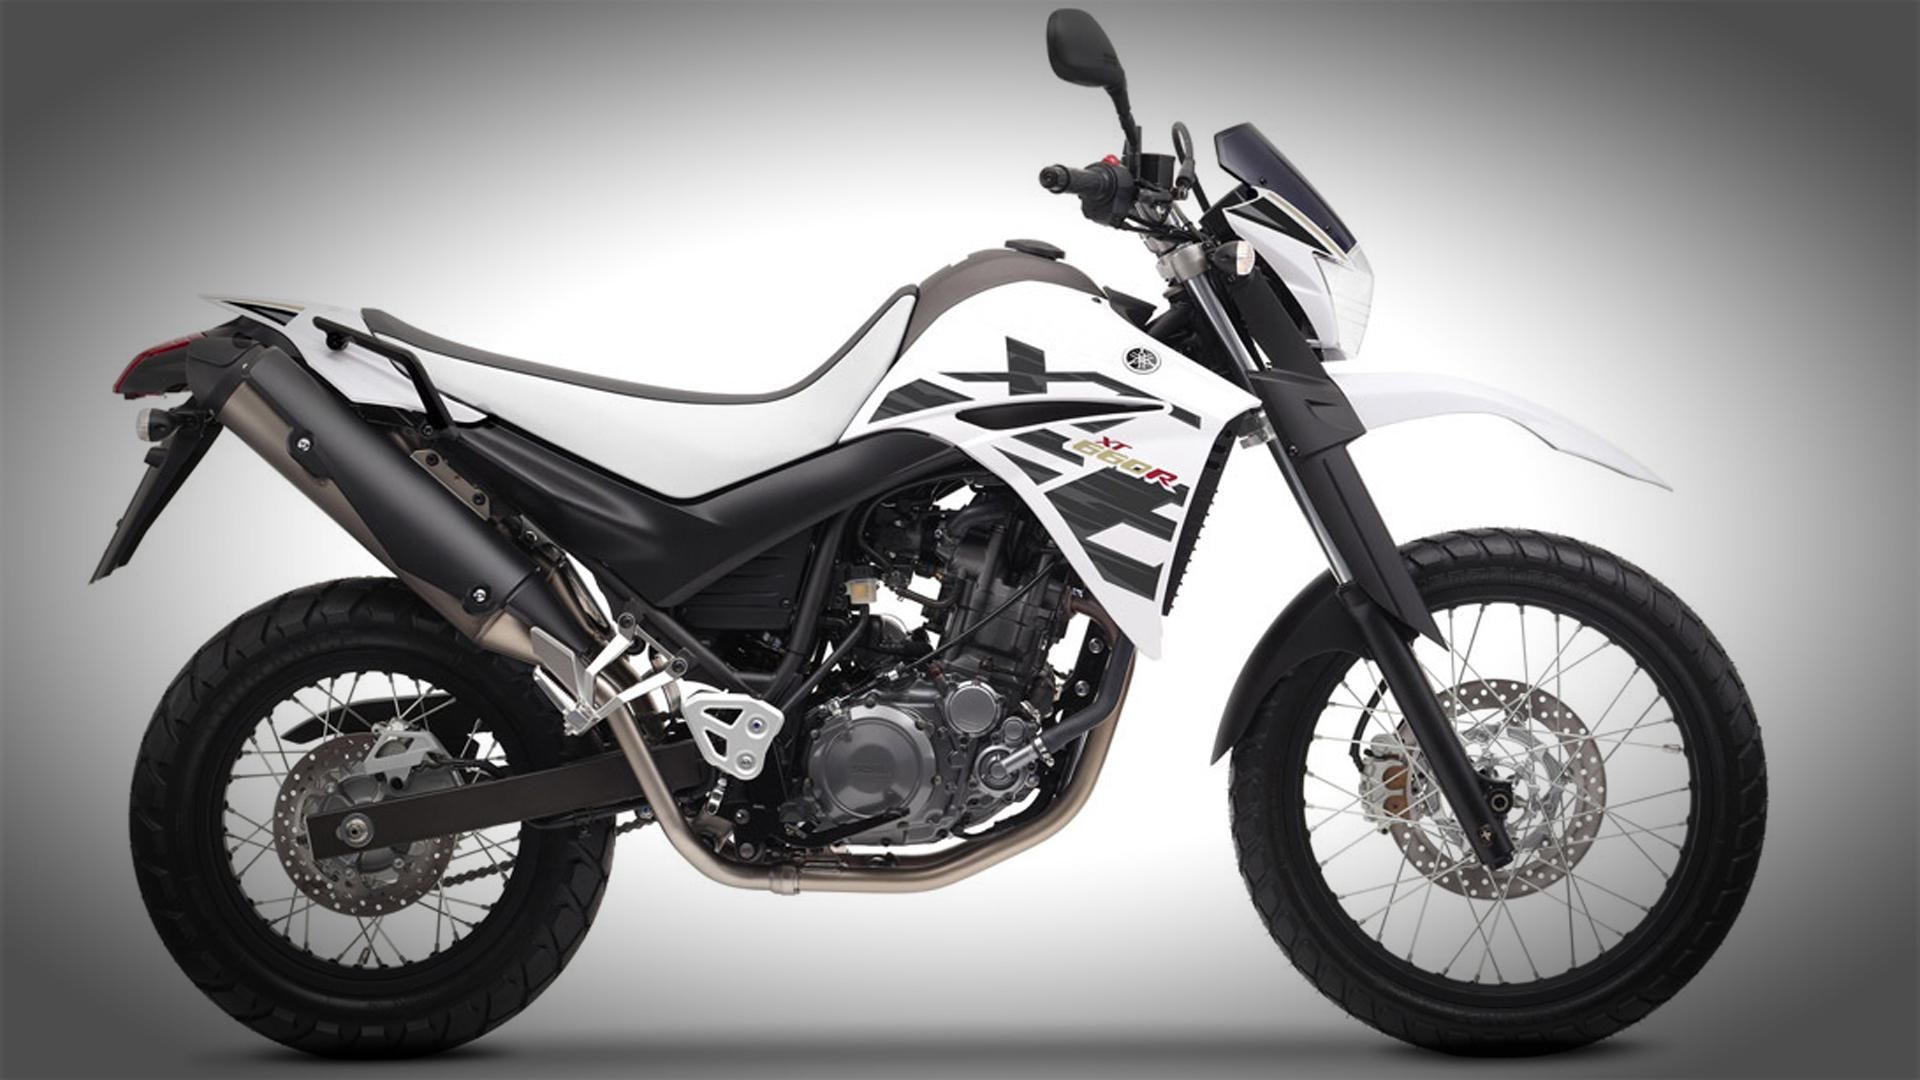 2014 Yamaha XT660R Single Cylinder Fuel Injection Features. Motos Personalizadas, Motos, Autos Y Motos